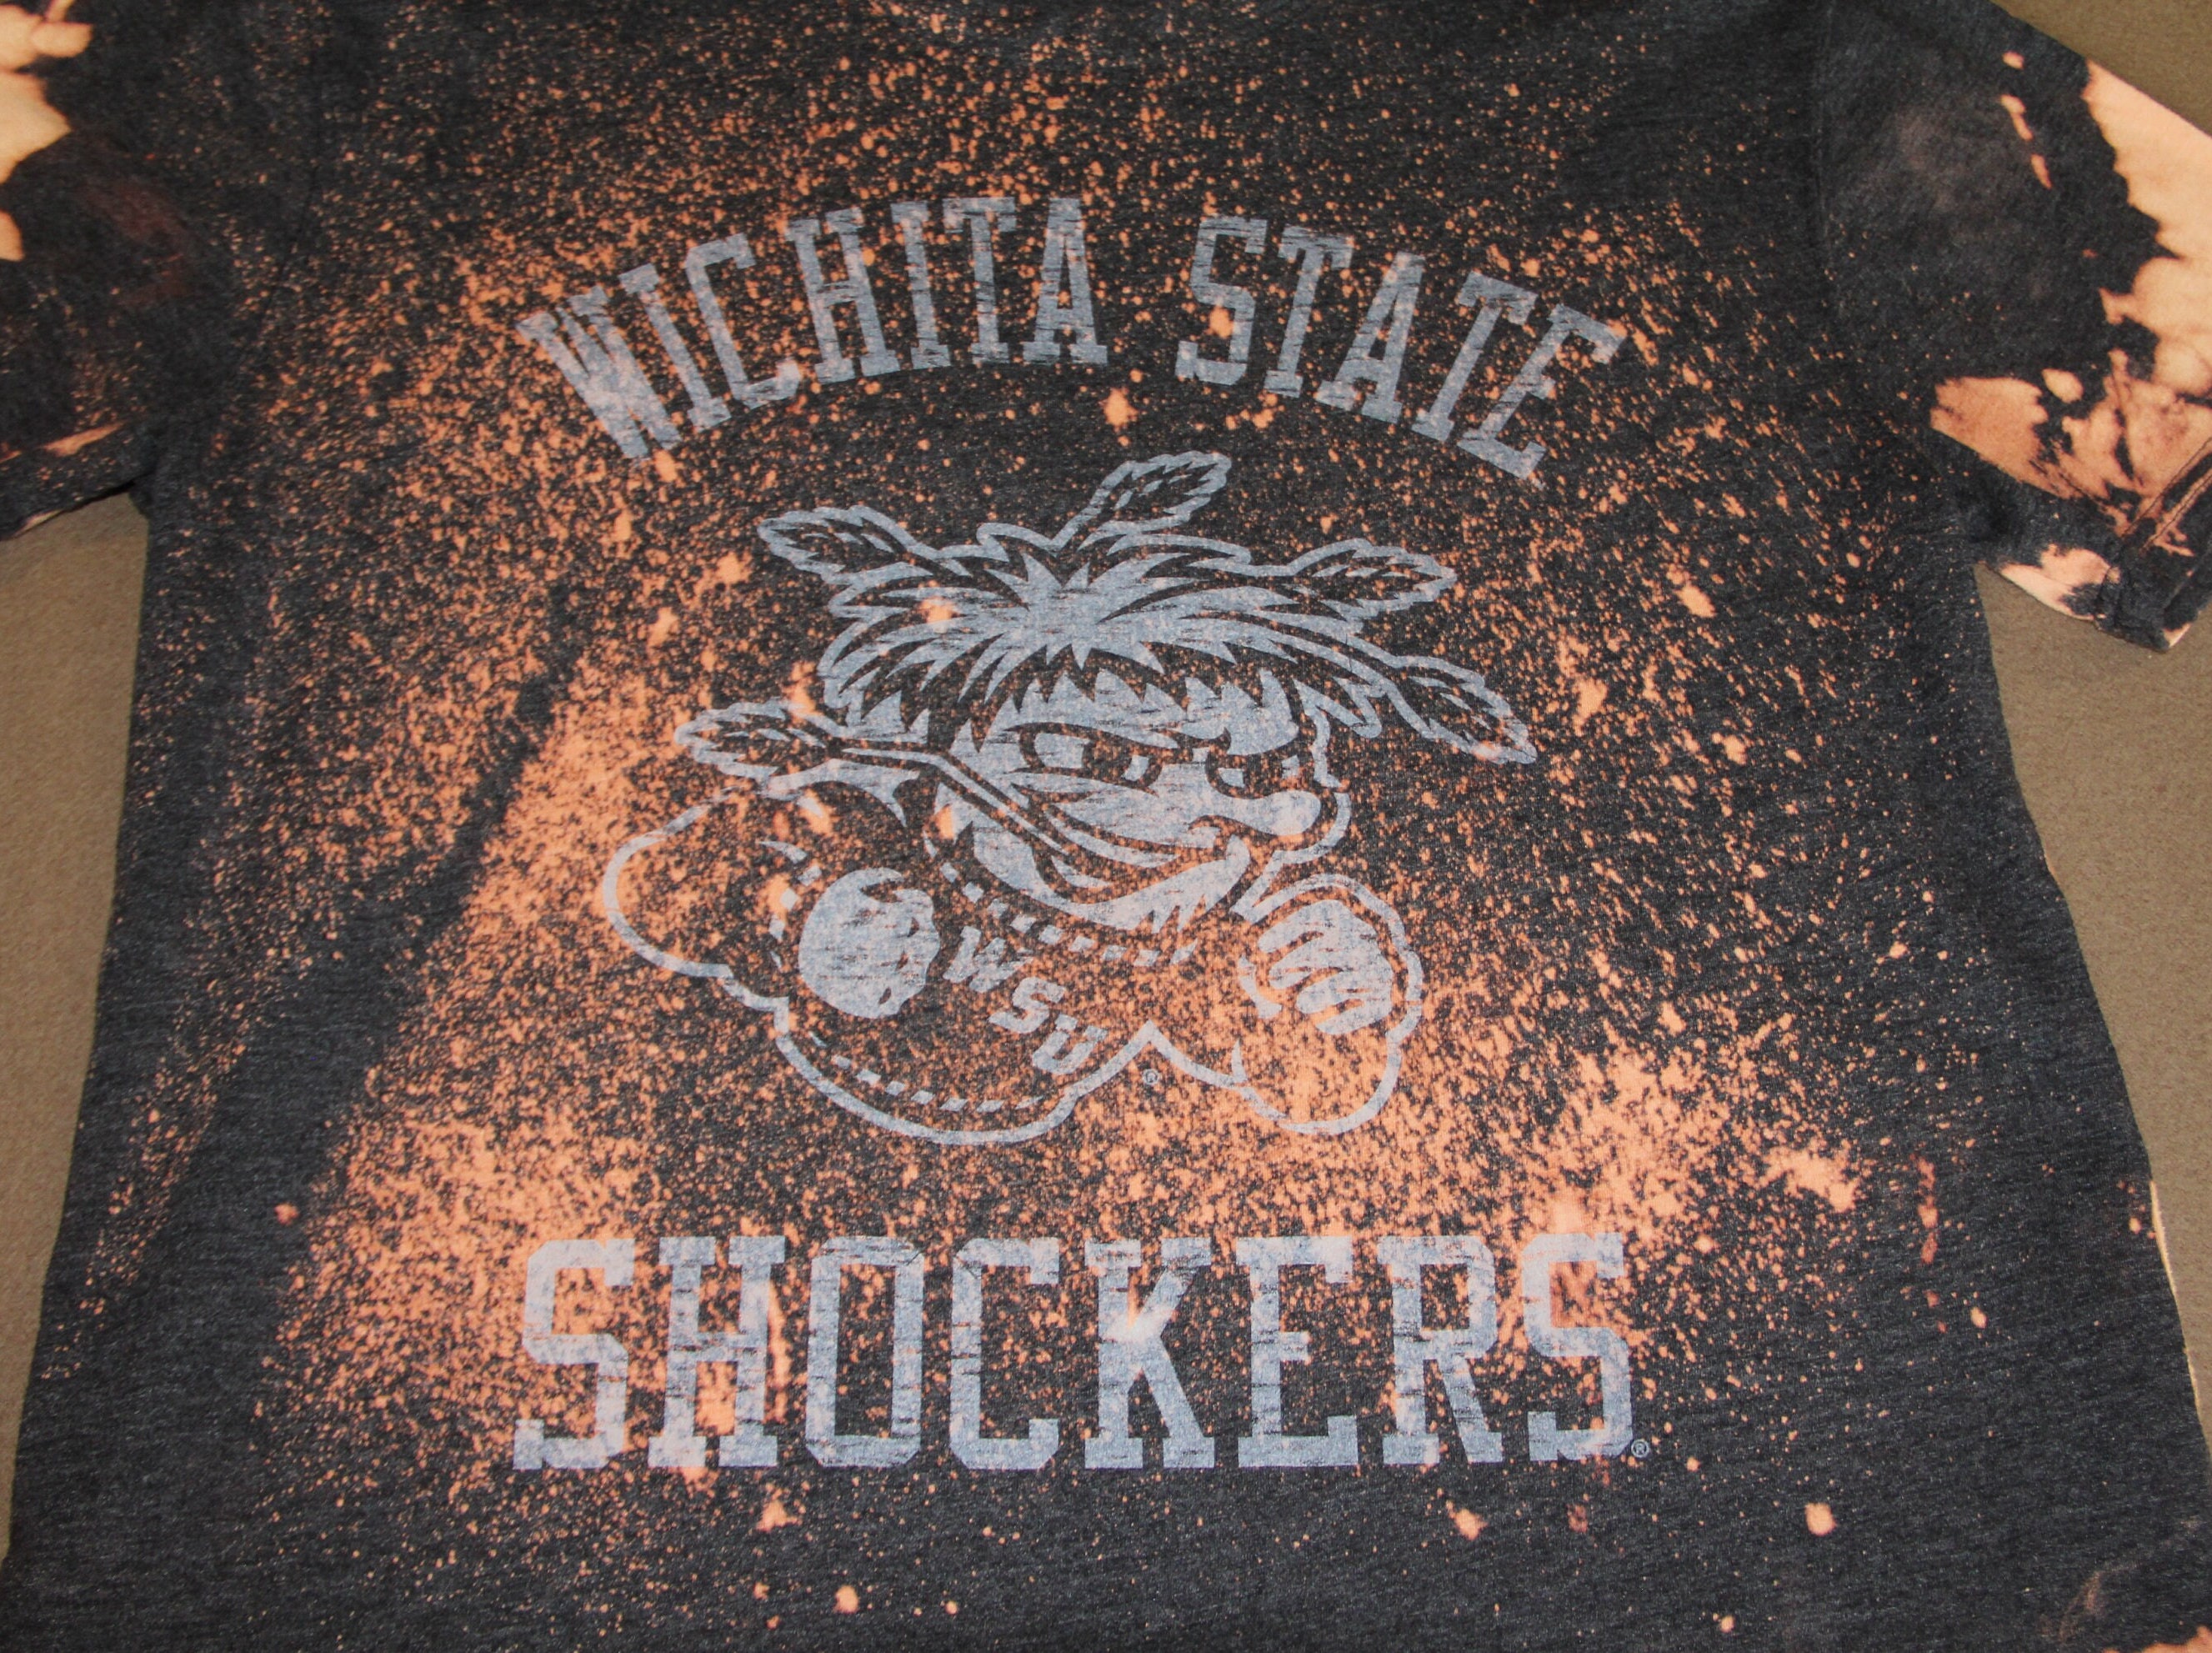 Wichita State Shockers SHOCKER Hand Sign Long Sleeve Shirt